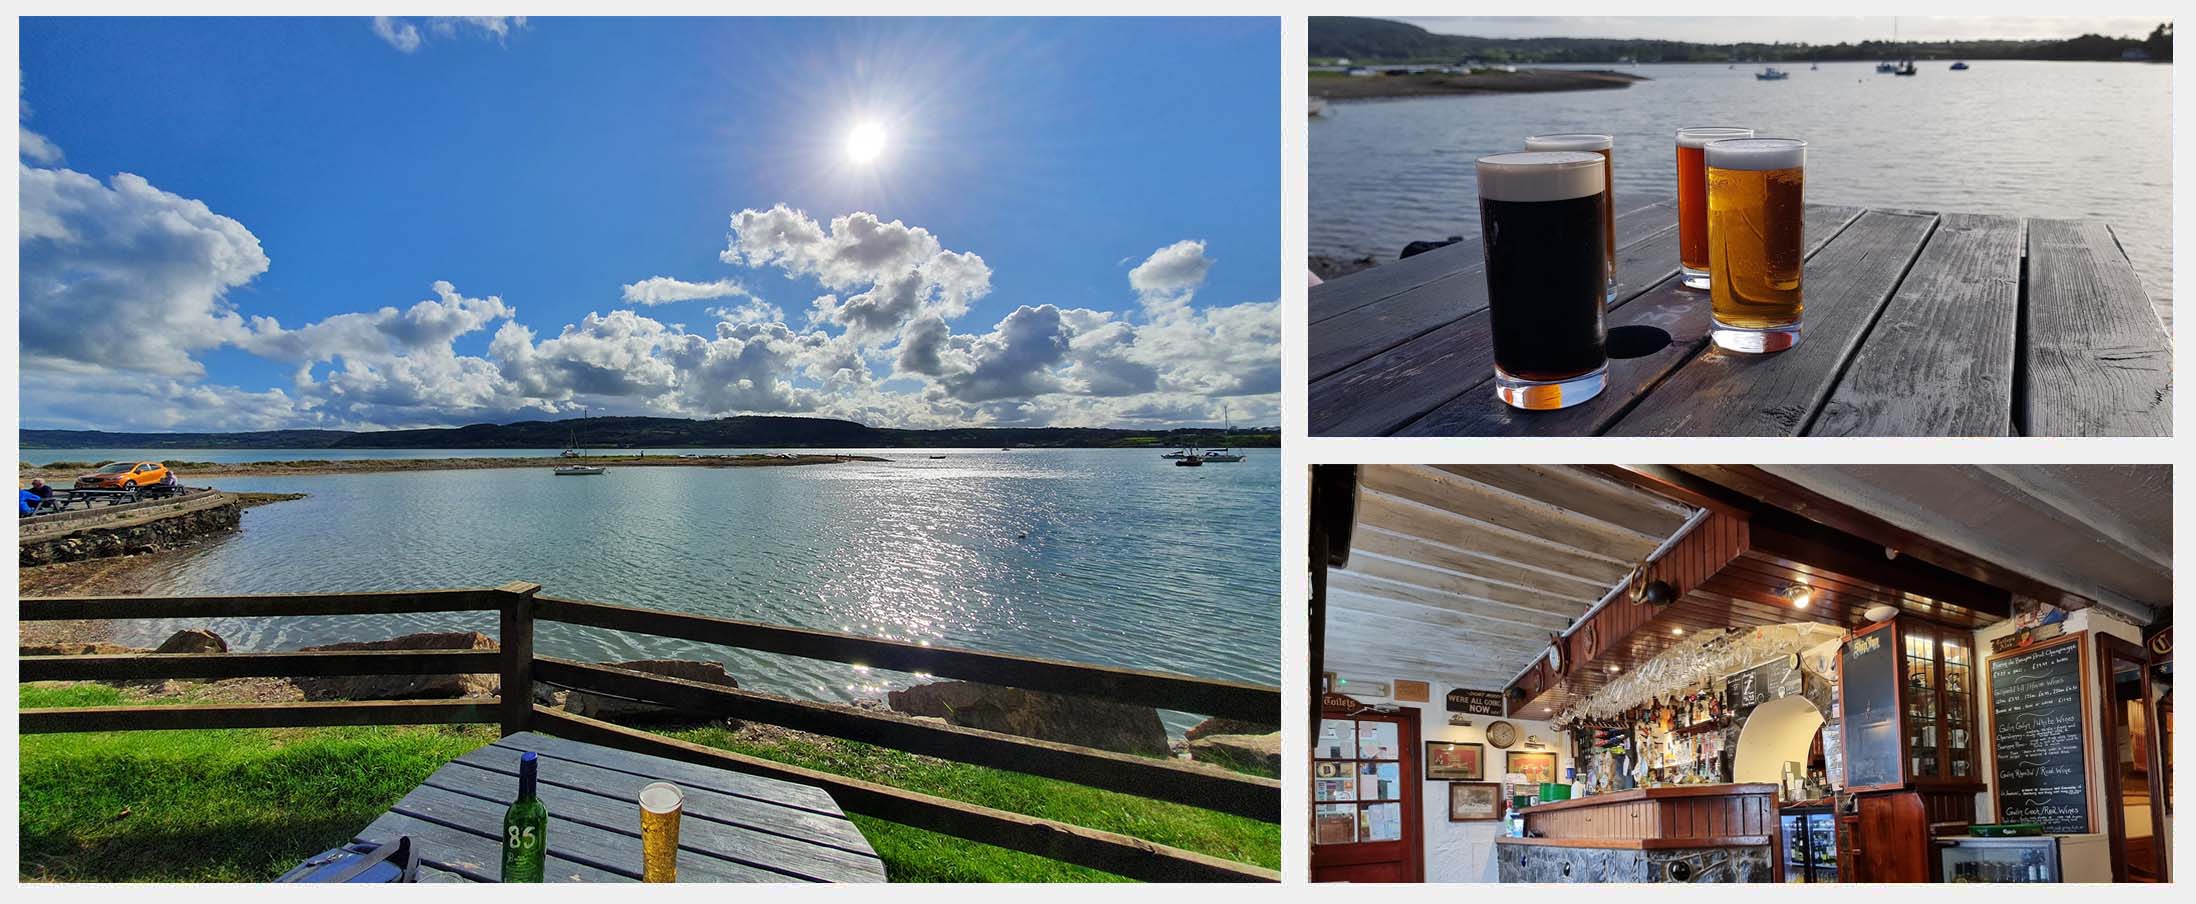 Best Beer Gardens in Wales - Ship Inn